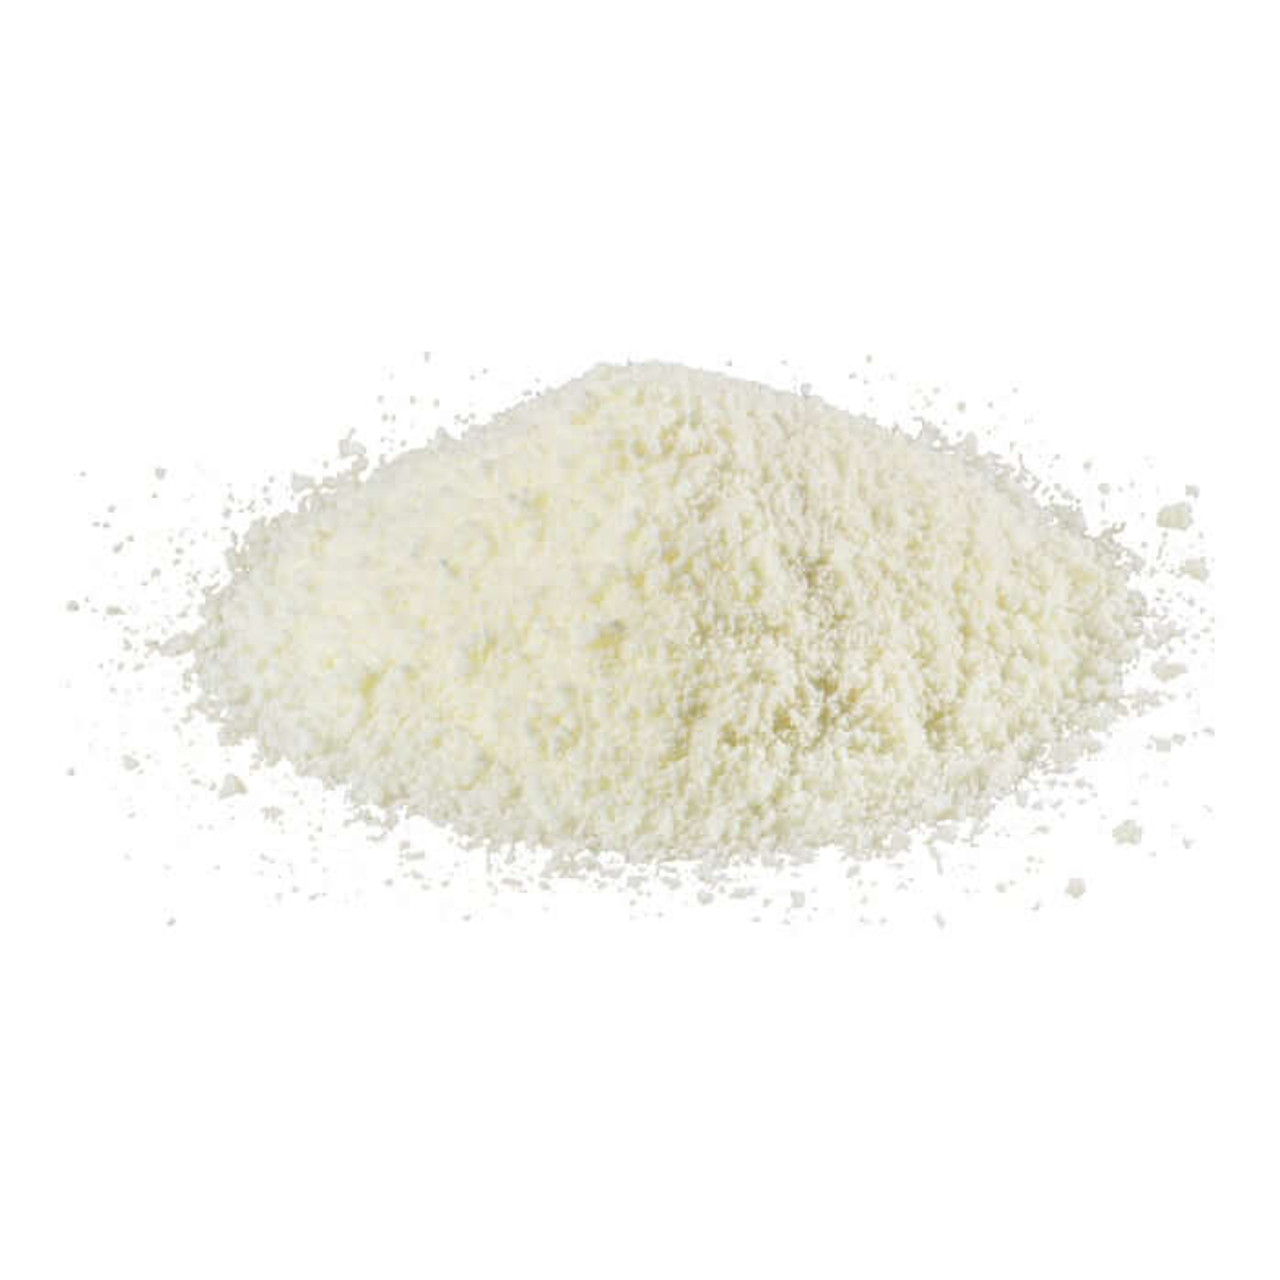 Parmalat Instant Skim Milk Powder - Premium Bulk 10Kg (22lbs) CHICKEN PIECES